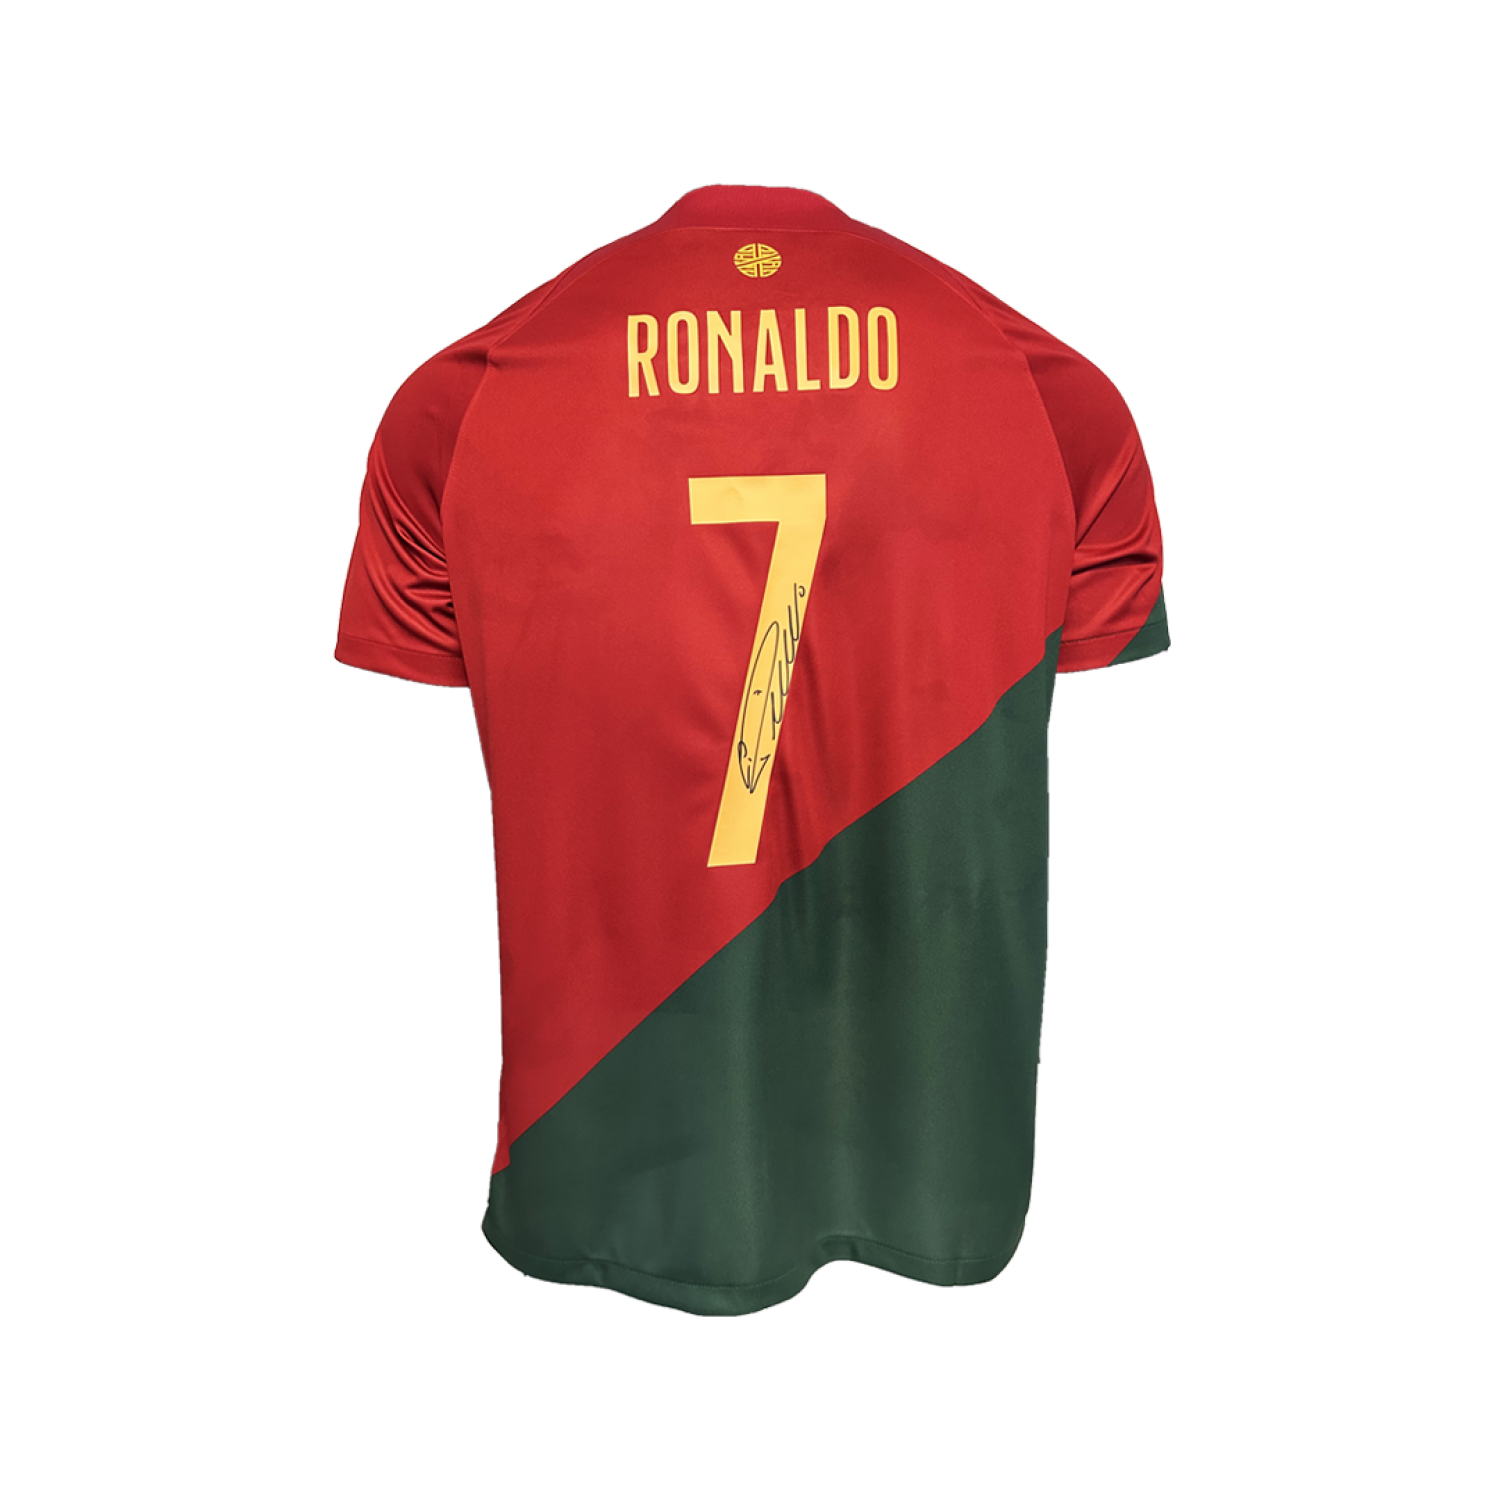 Cristiano Ronaldo Signed Portugal 2022 Jersey (fan style)